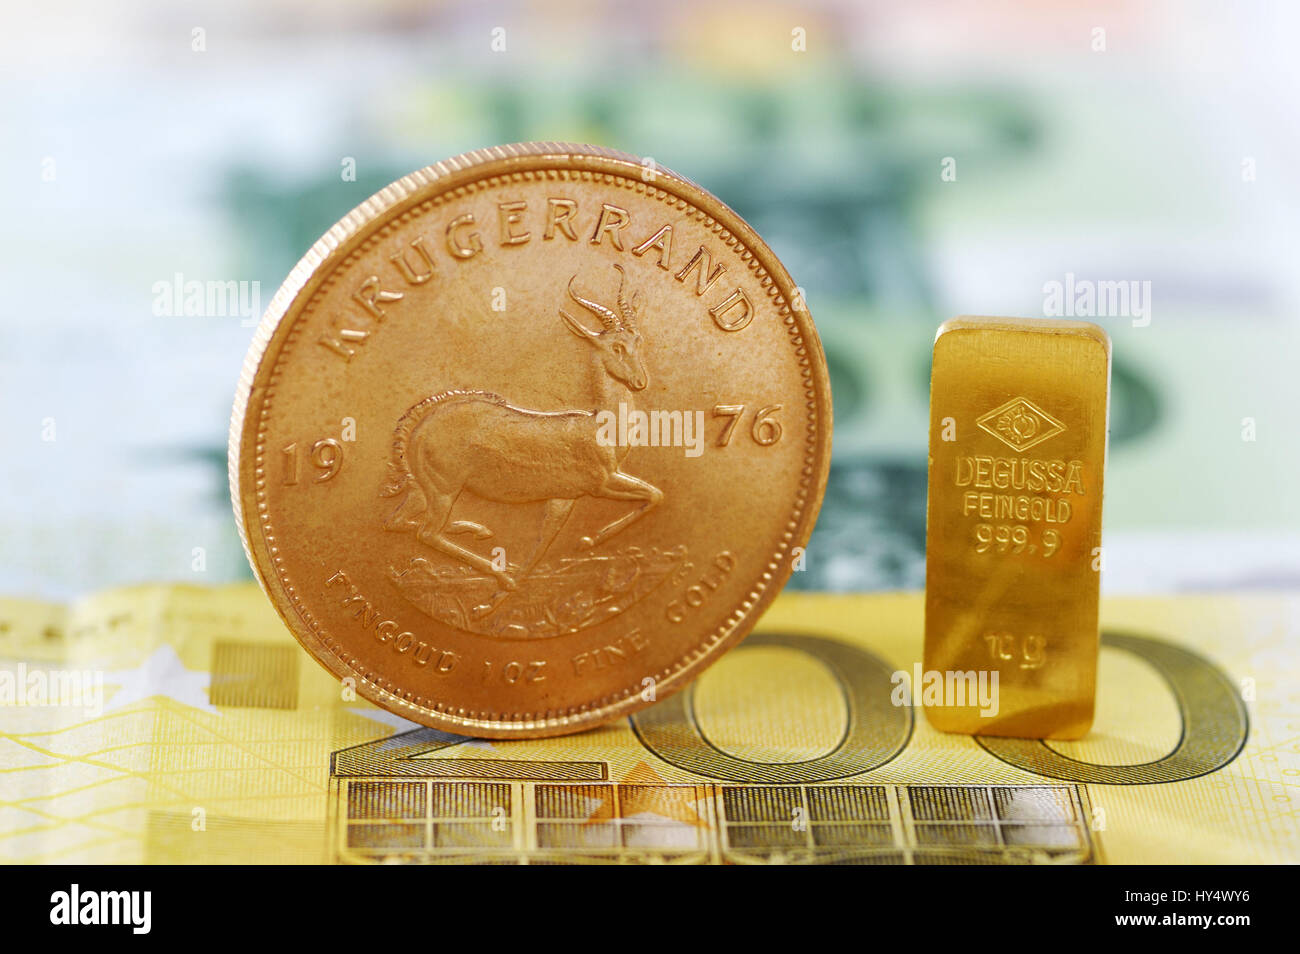 Jarra coin edge y barra de oro en euro-notas, precio oro, Krugerrand-Muenze  und Goldbarren auf Euro-Scheinen, Goldpreis Fotografía de stock - Alamy